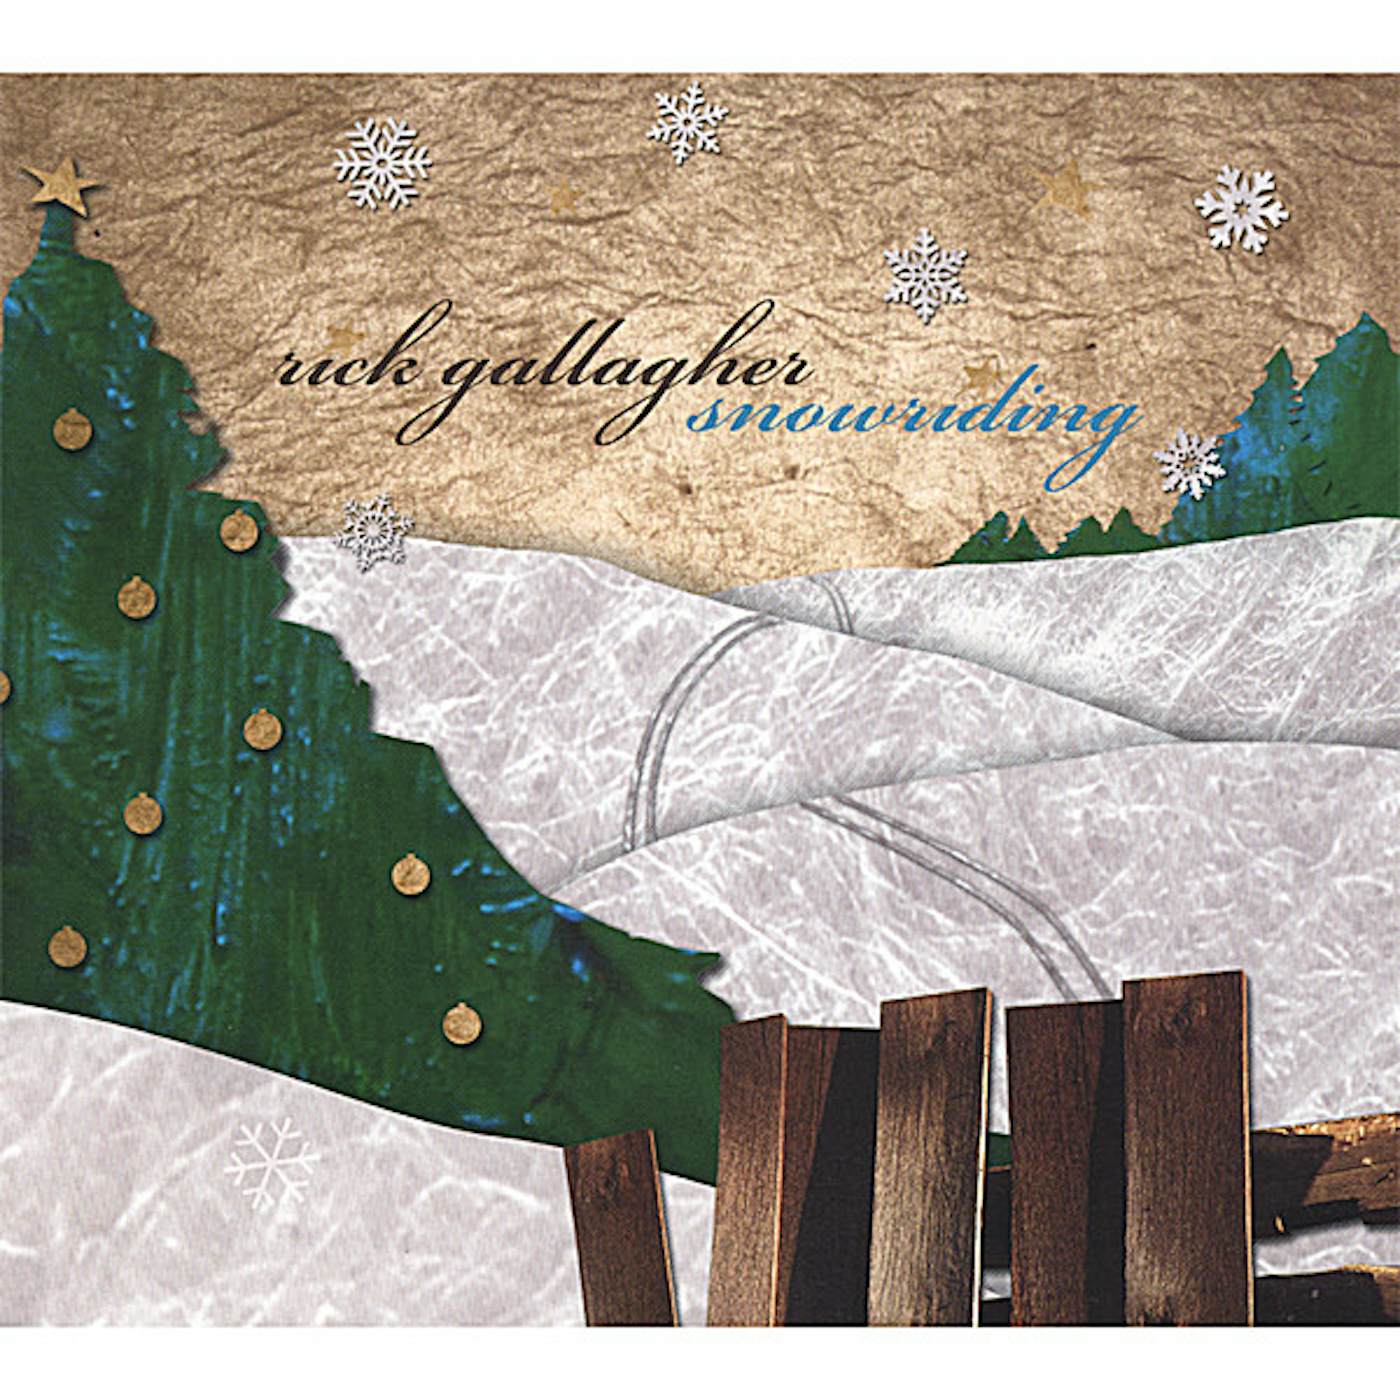 Rick Gallagher SNOWRIDING CD